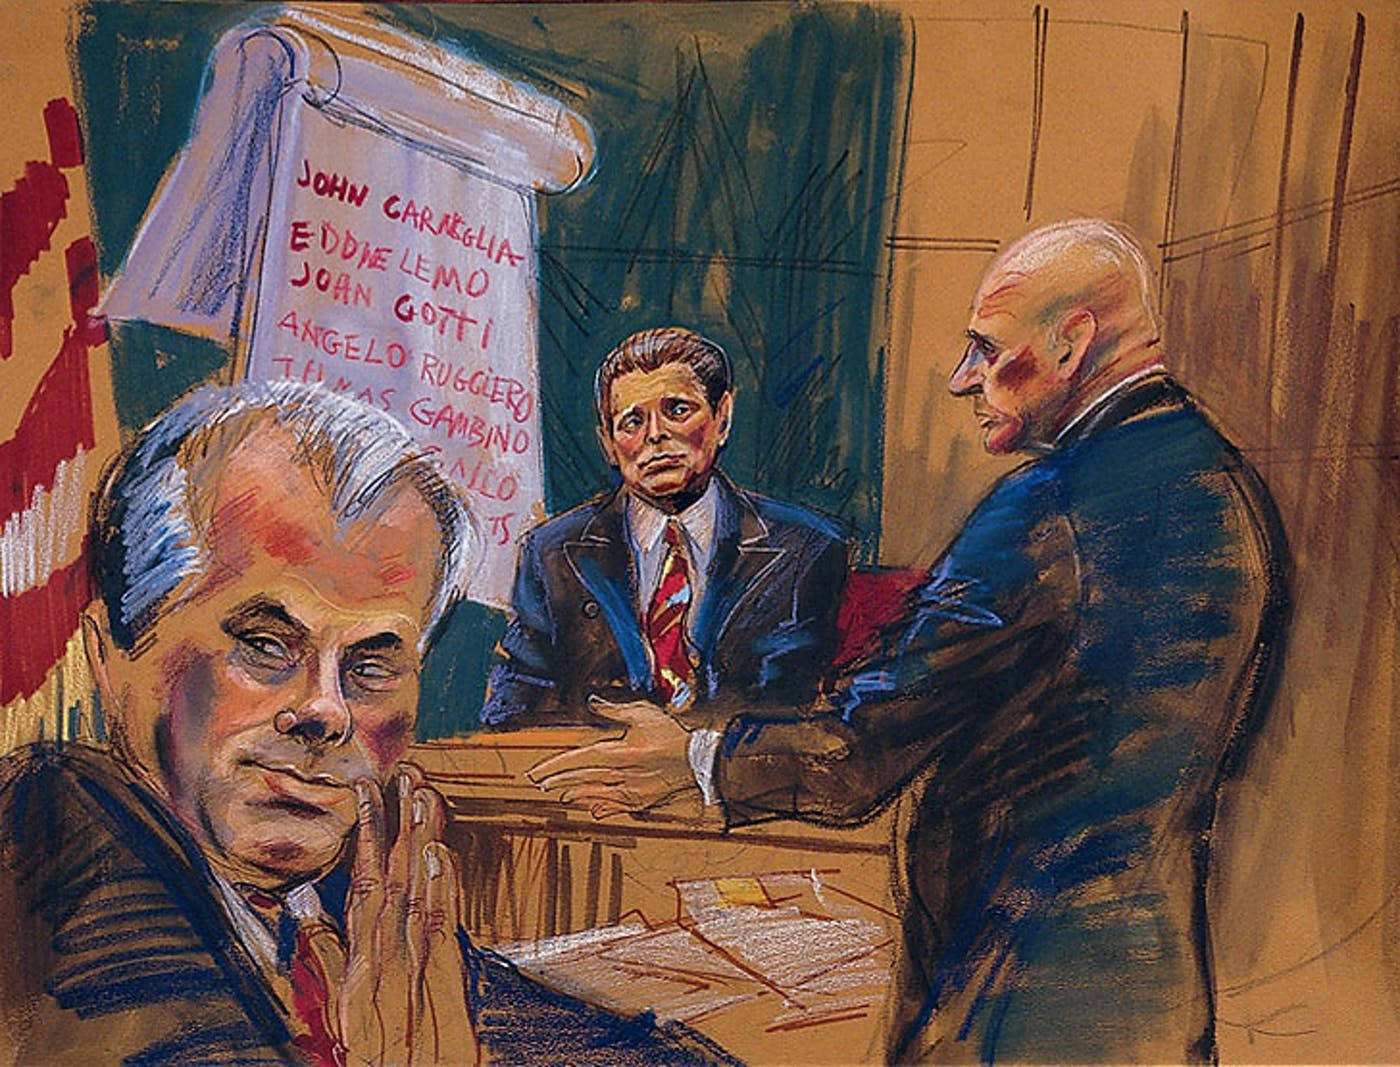 John Gotti Trial Art Background